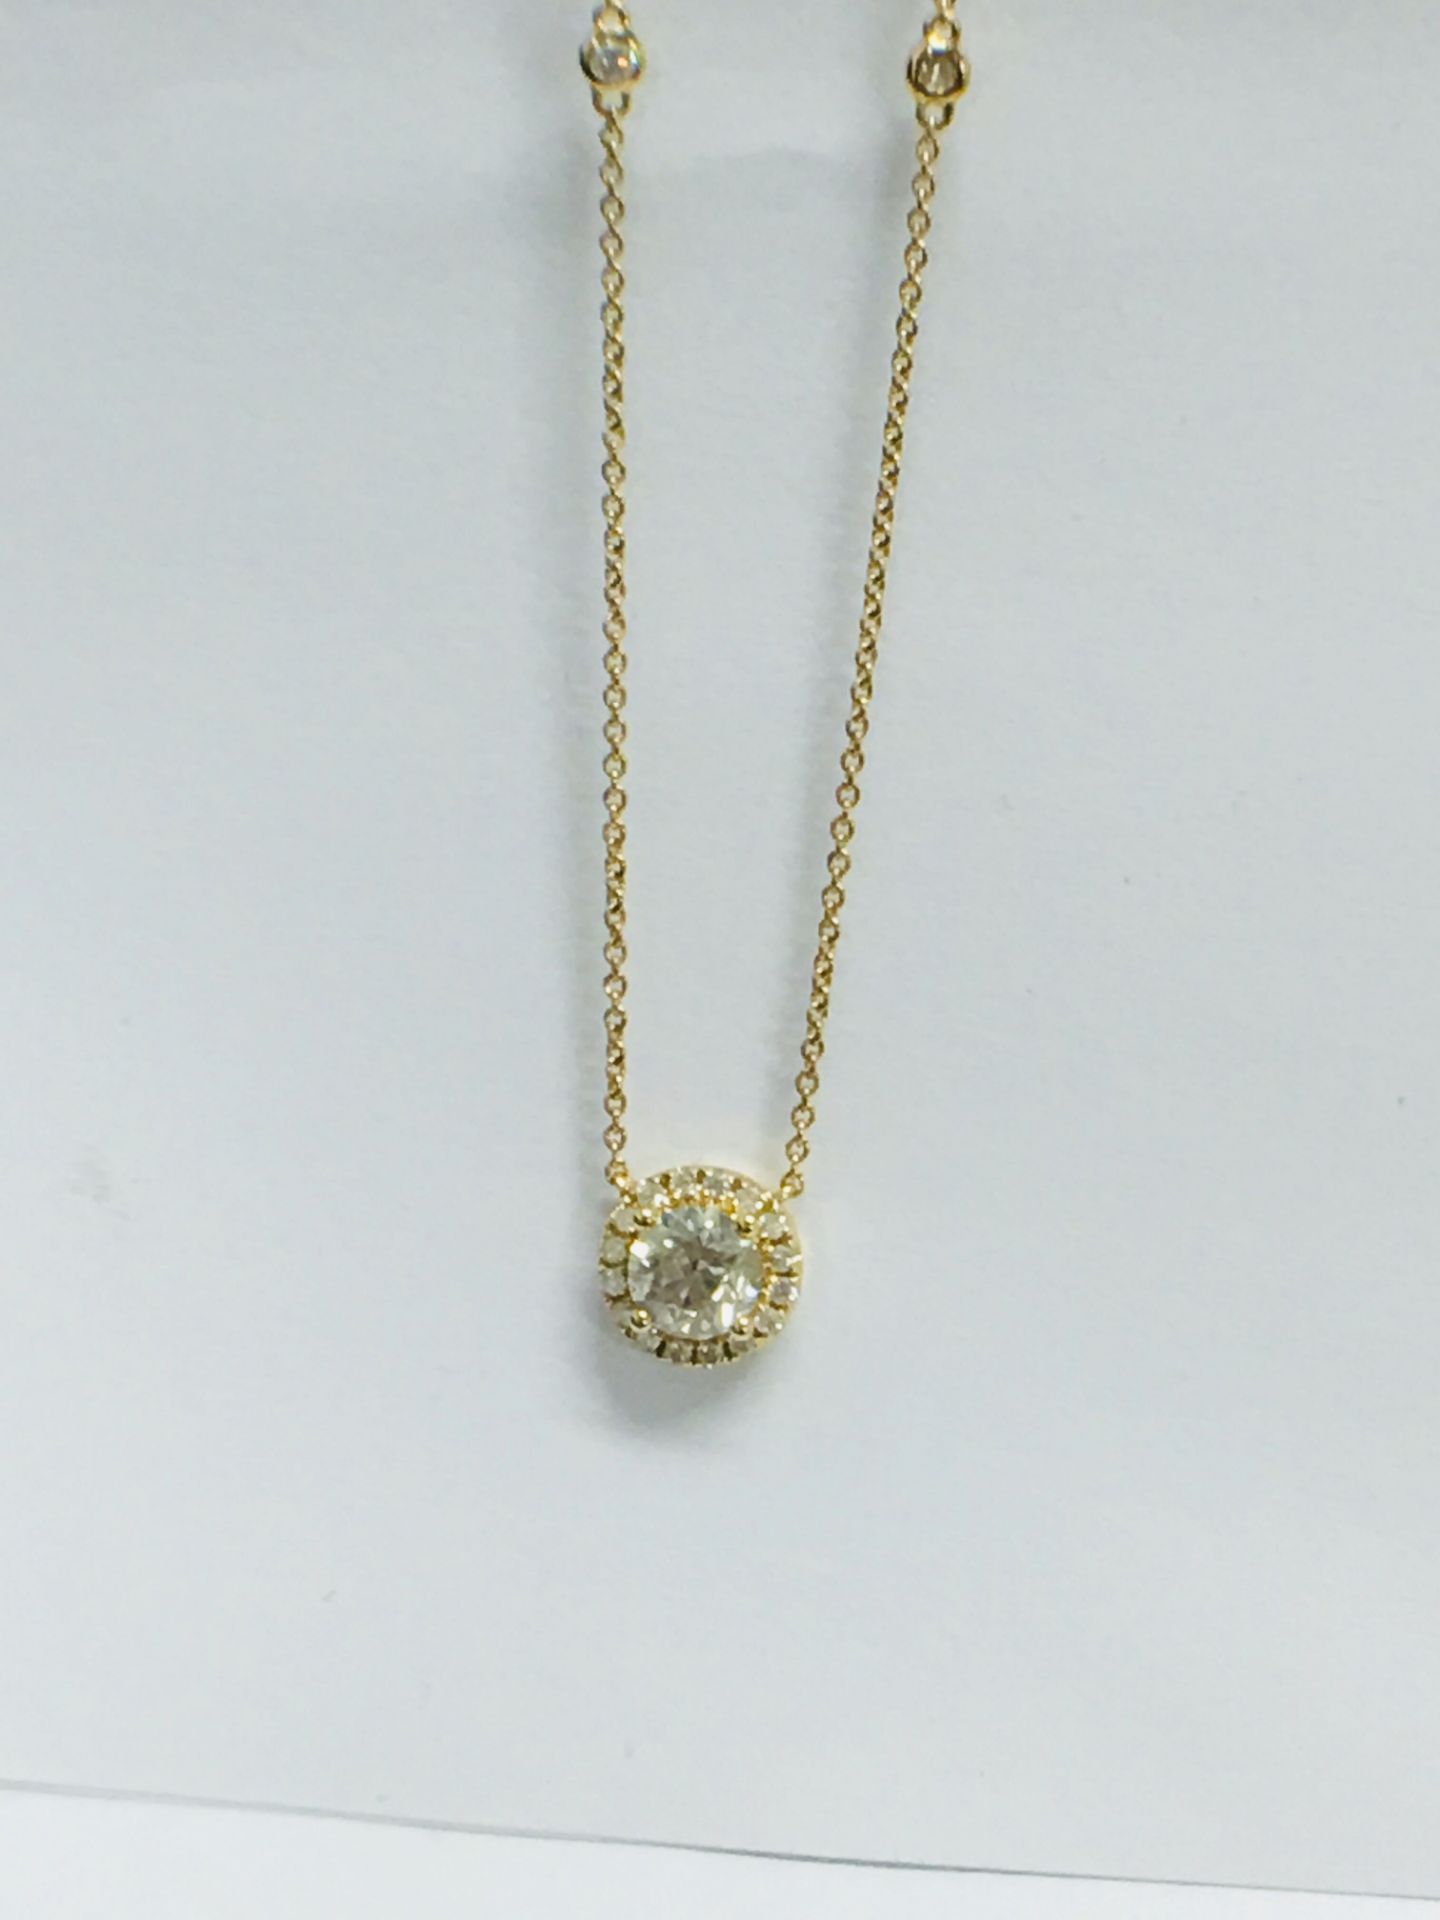 18ct Yellow Gold Diamond Necklace tdw - Image 9 of 10